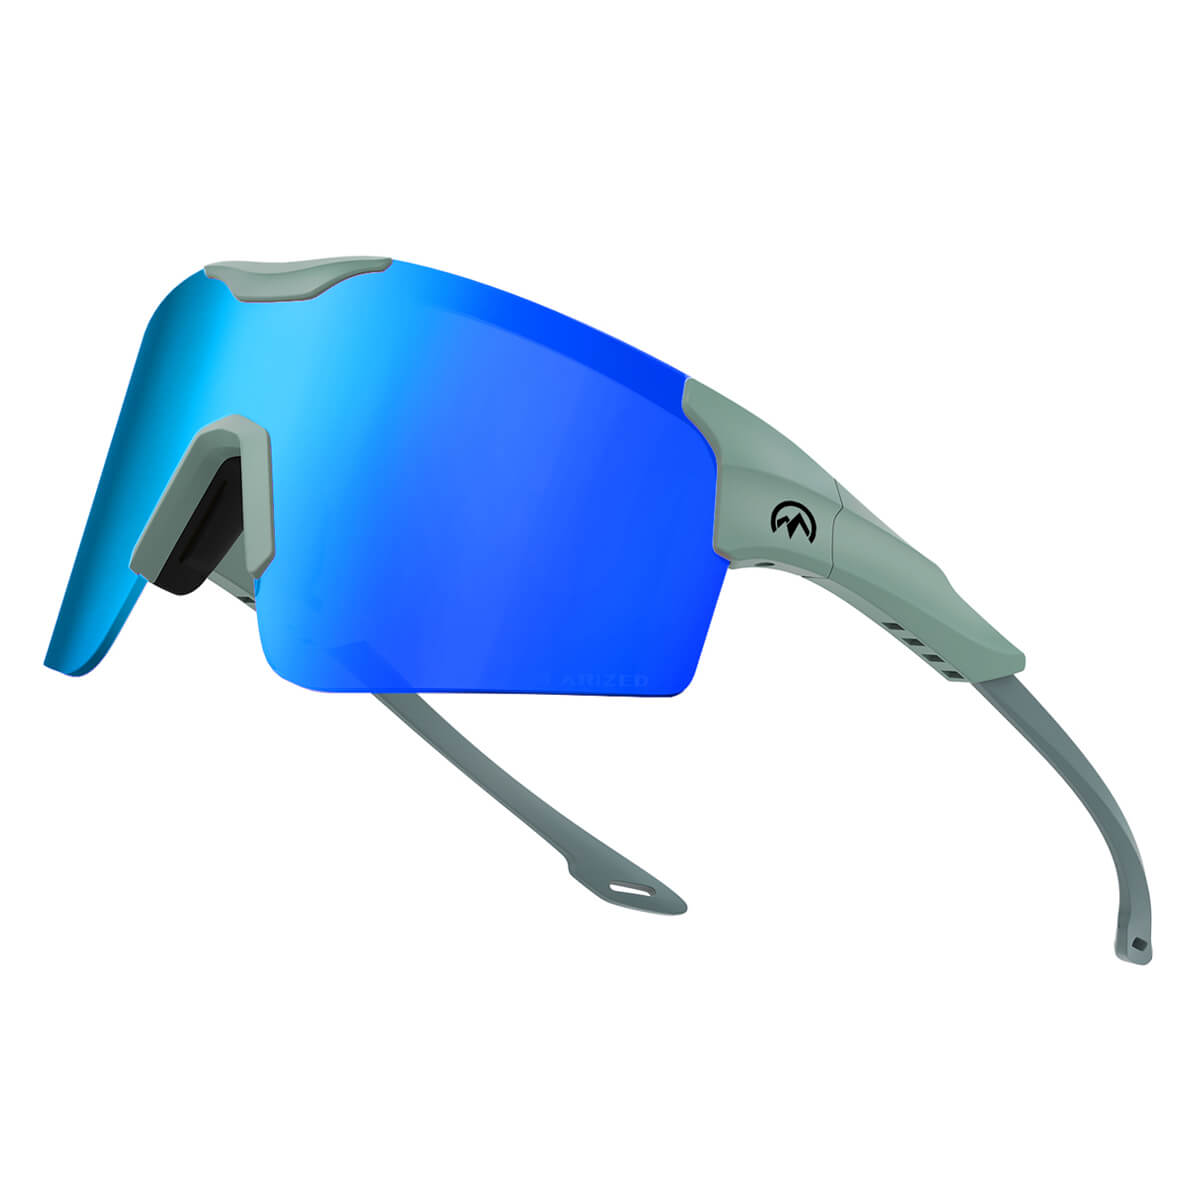 Hawk III Polarized Sports Cycling Sunglasses